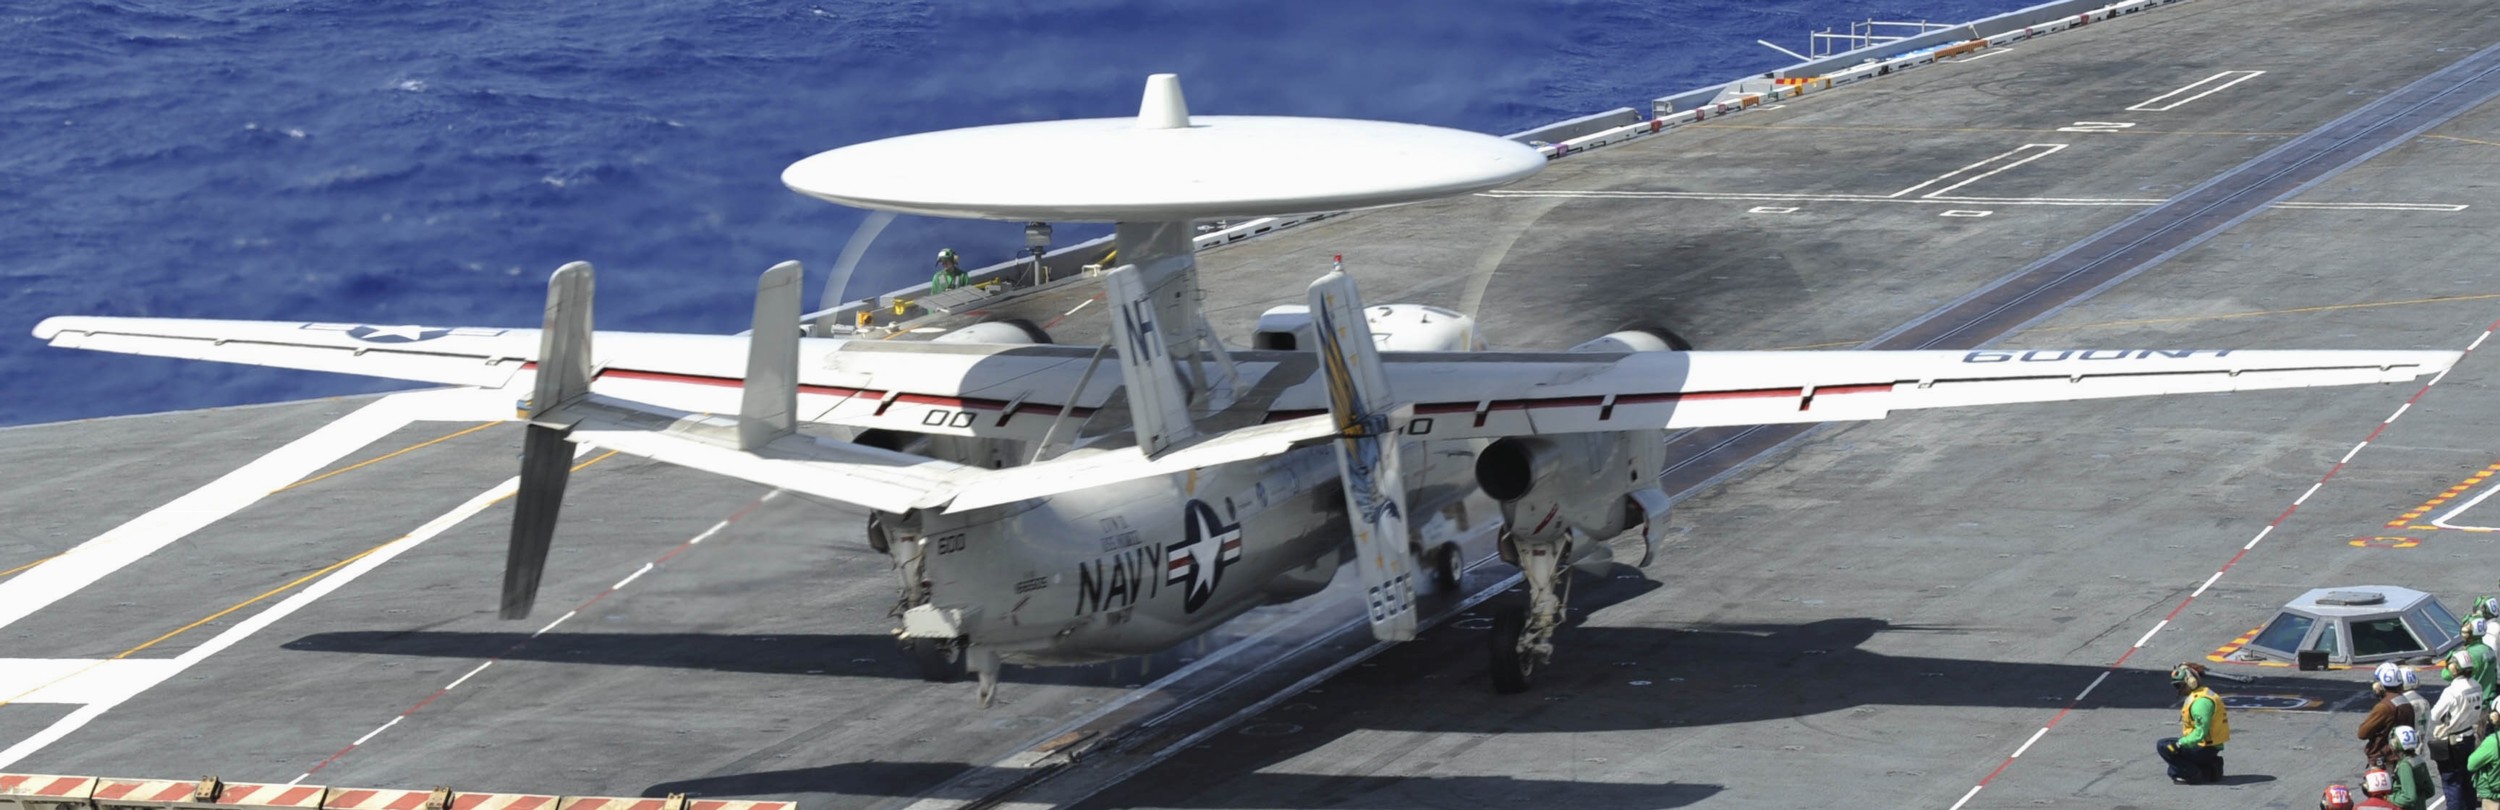 vaw-117 wallbangers carrier airborne early warning squadron navy e-2c hawkeye cvw-11 uss nimitz cvn-68 123